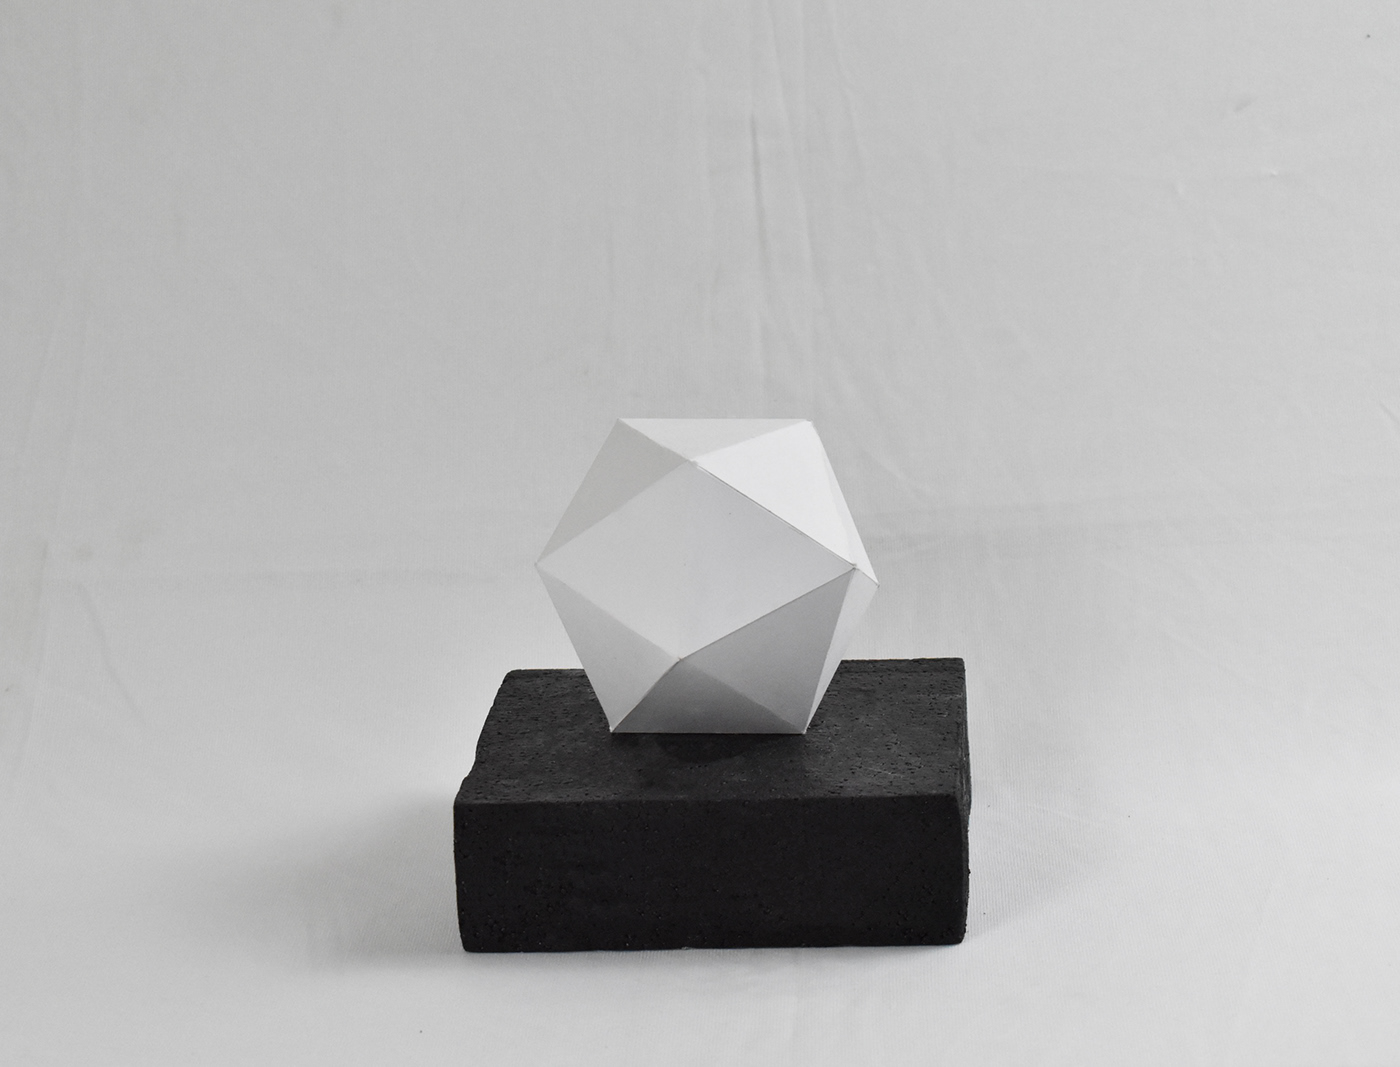 platonic solids icosahedron dodecahedron